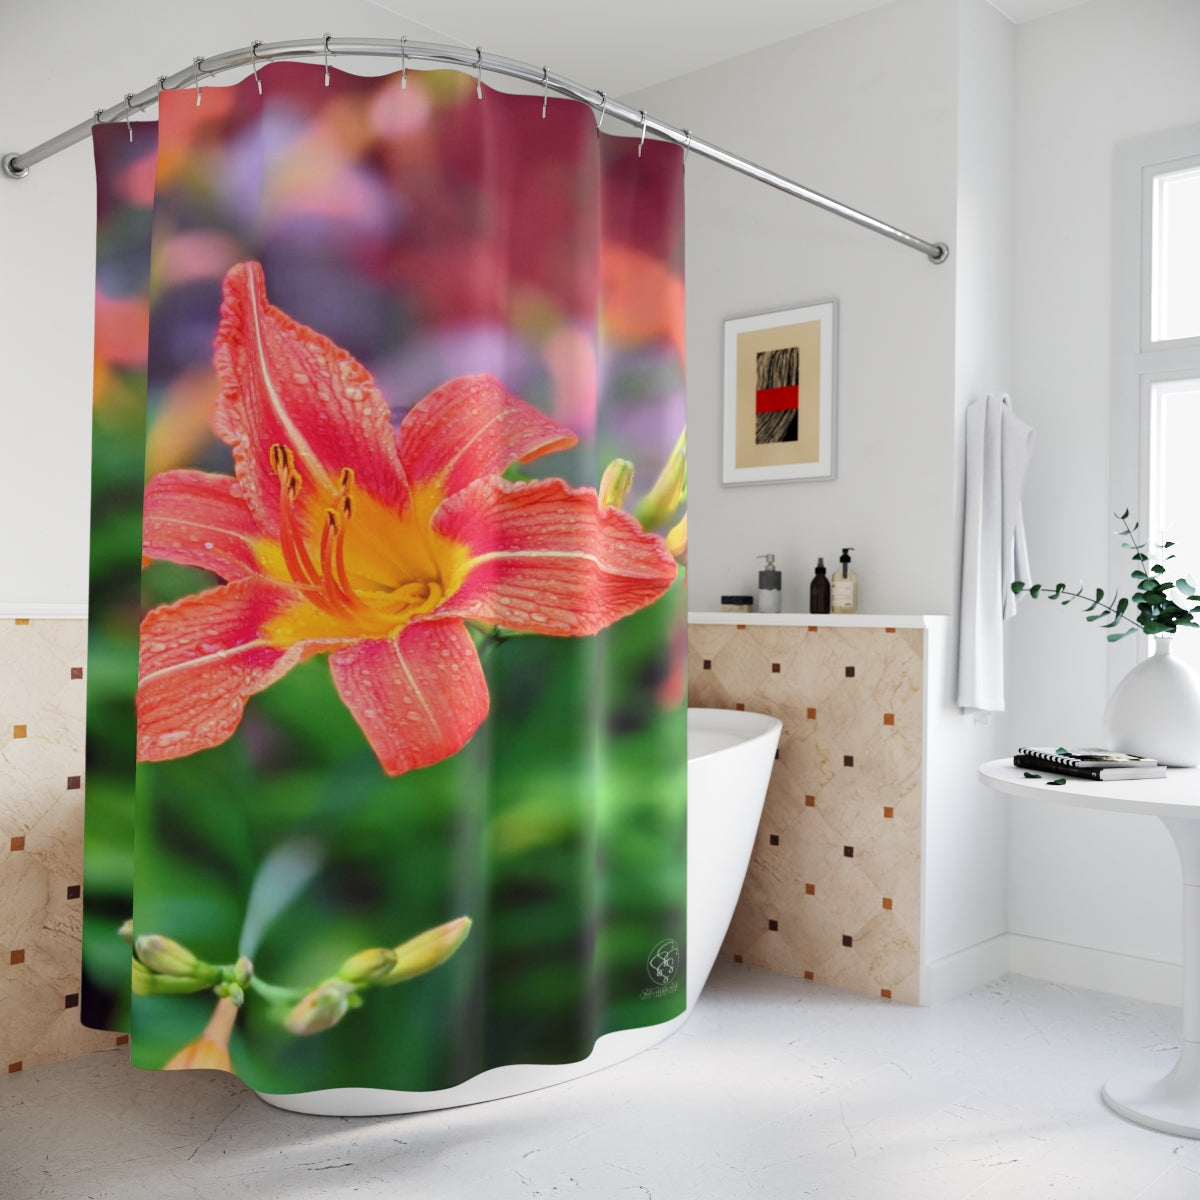 SSSS Orange Day-Lily Shower Curtain